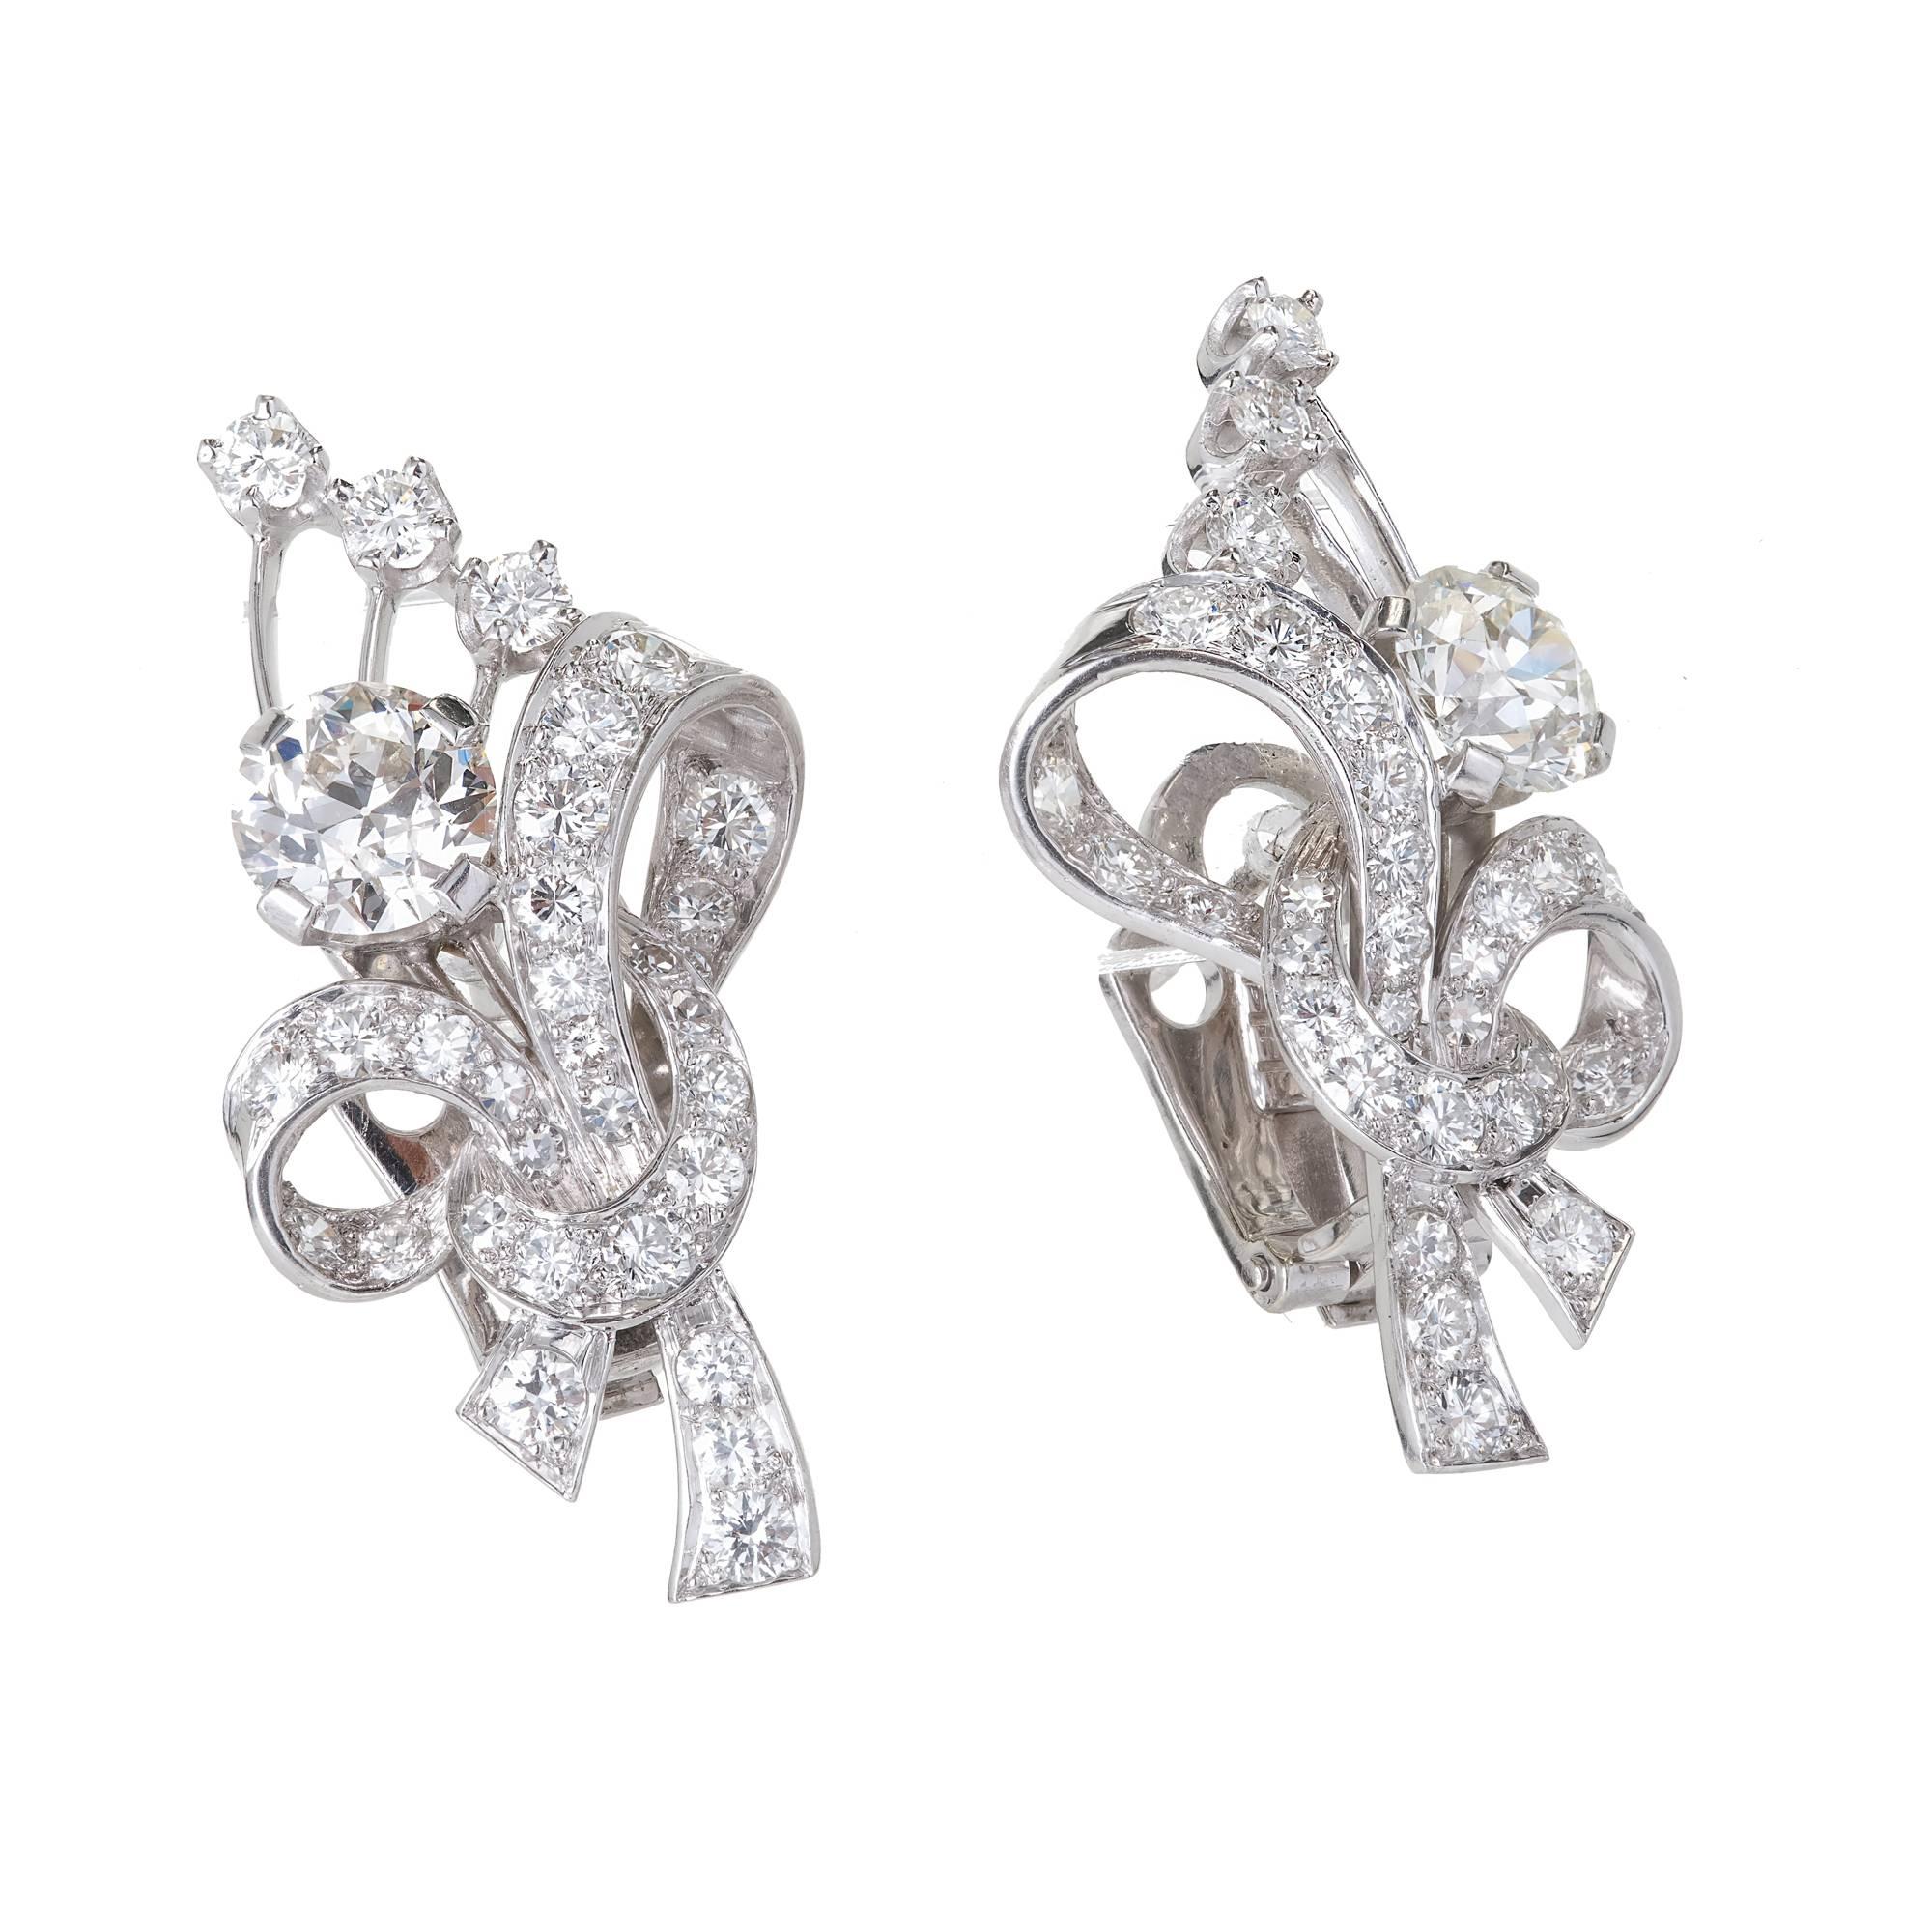 Handmade diamond platinum flower earrings. Circa 1930-1940. The two center diamonds are EGL certified original old European cut diamonds. Ideal cut. Both face up white. 

1 old European cut 1.38ct H, VS1
1 old European cut 1.37ct J, VS1
62 round